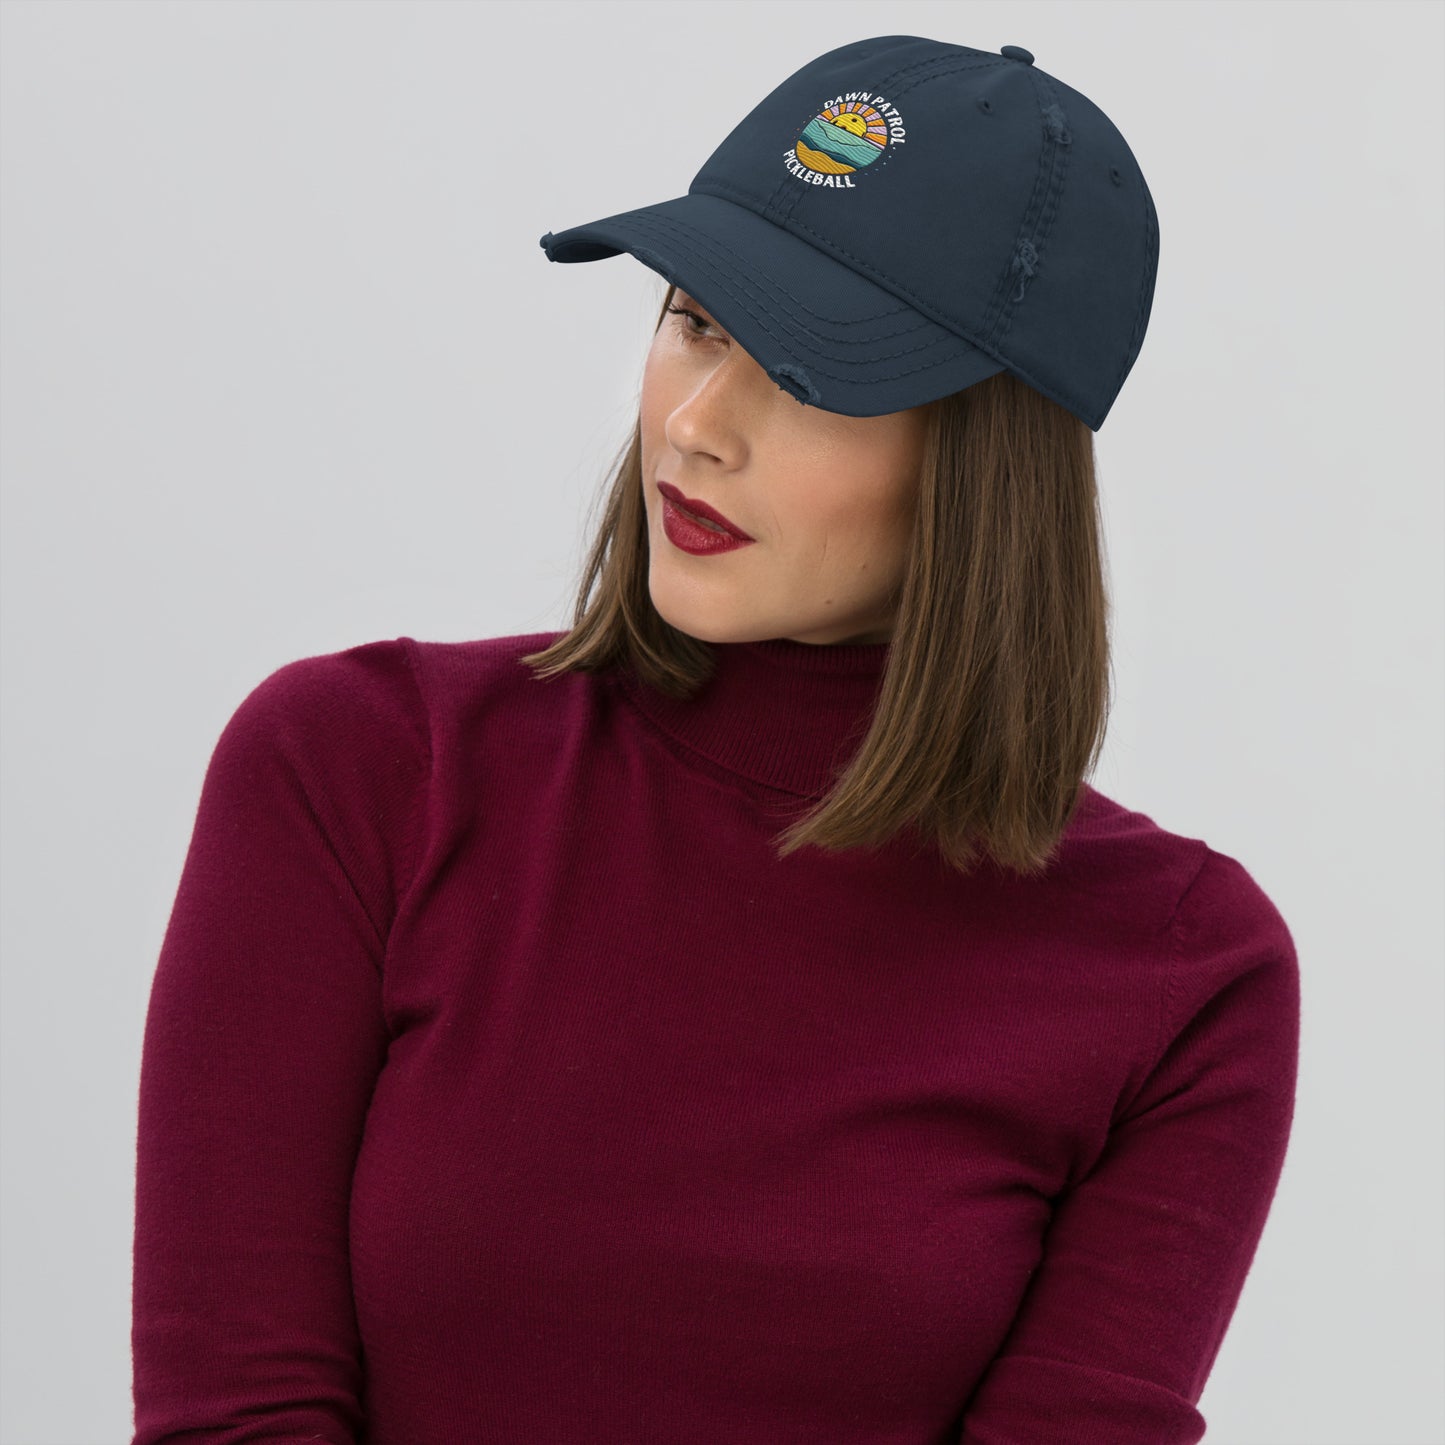 Dawn Patrol Embroidered Distressed Hat - adjustable back